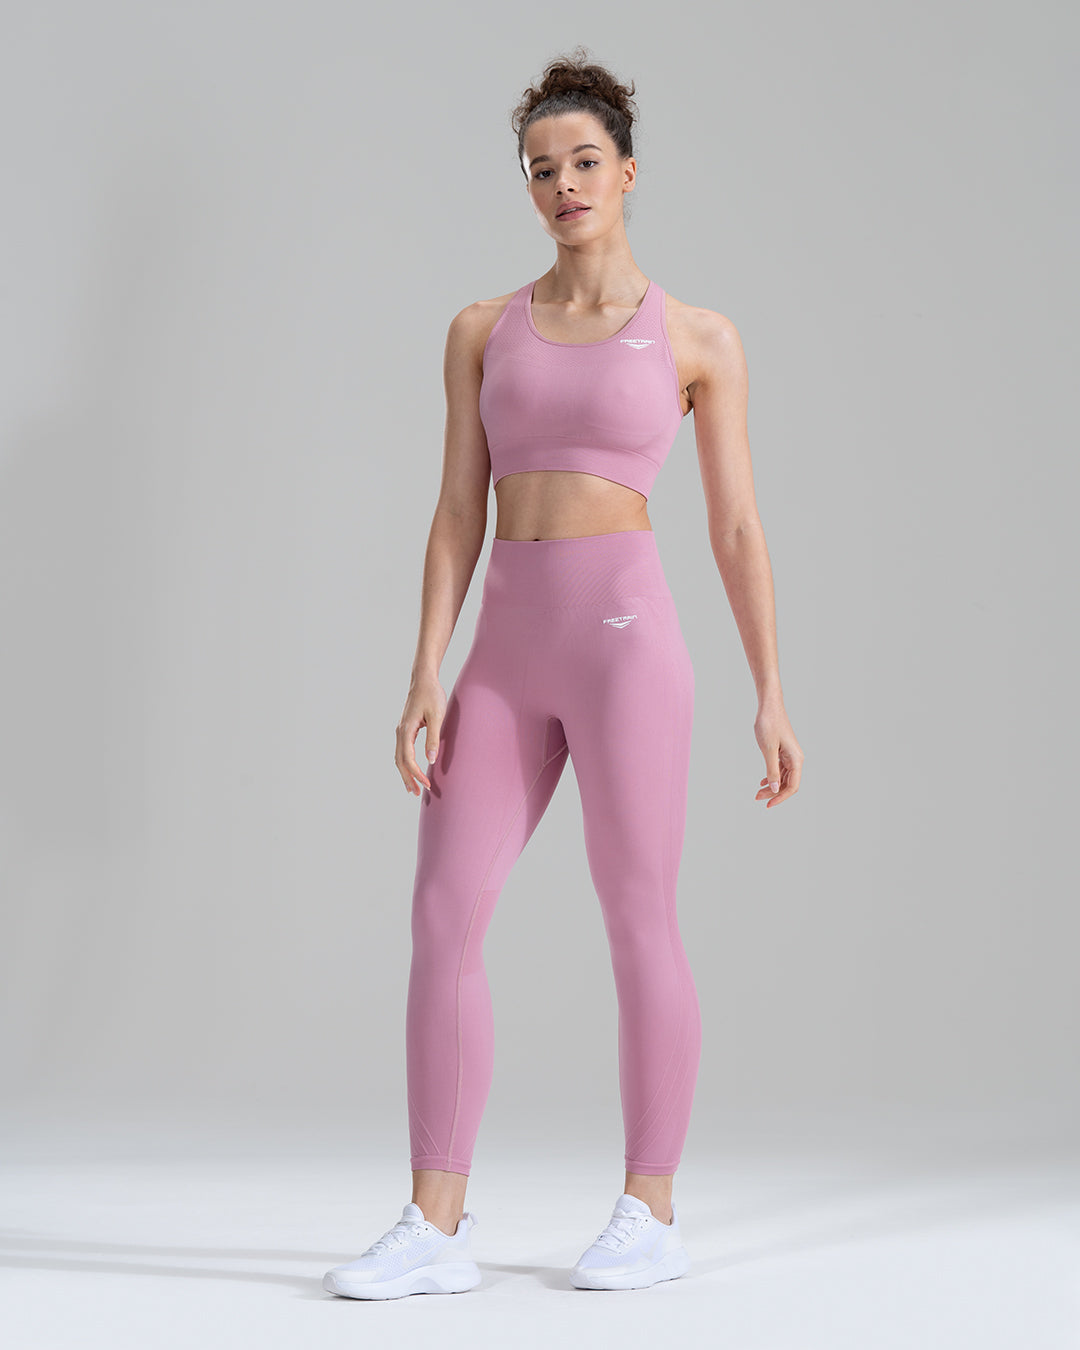 Pink Nike Pants & Leggings